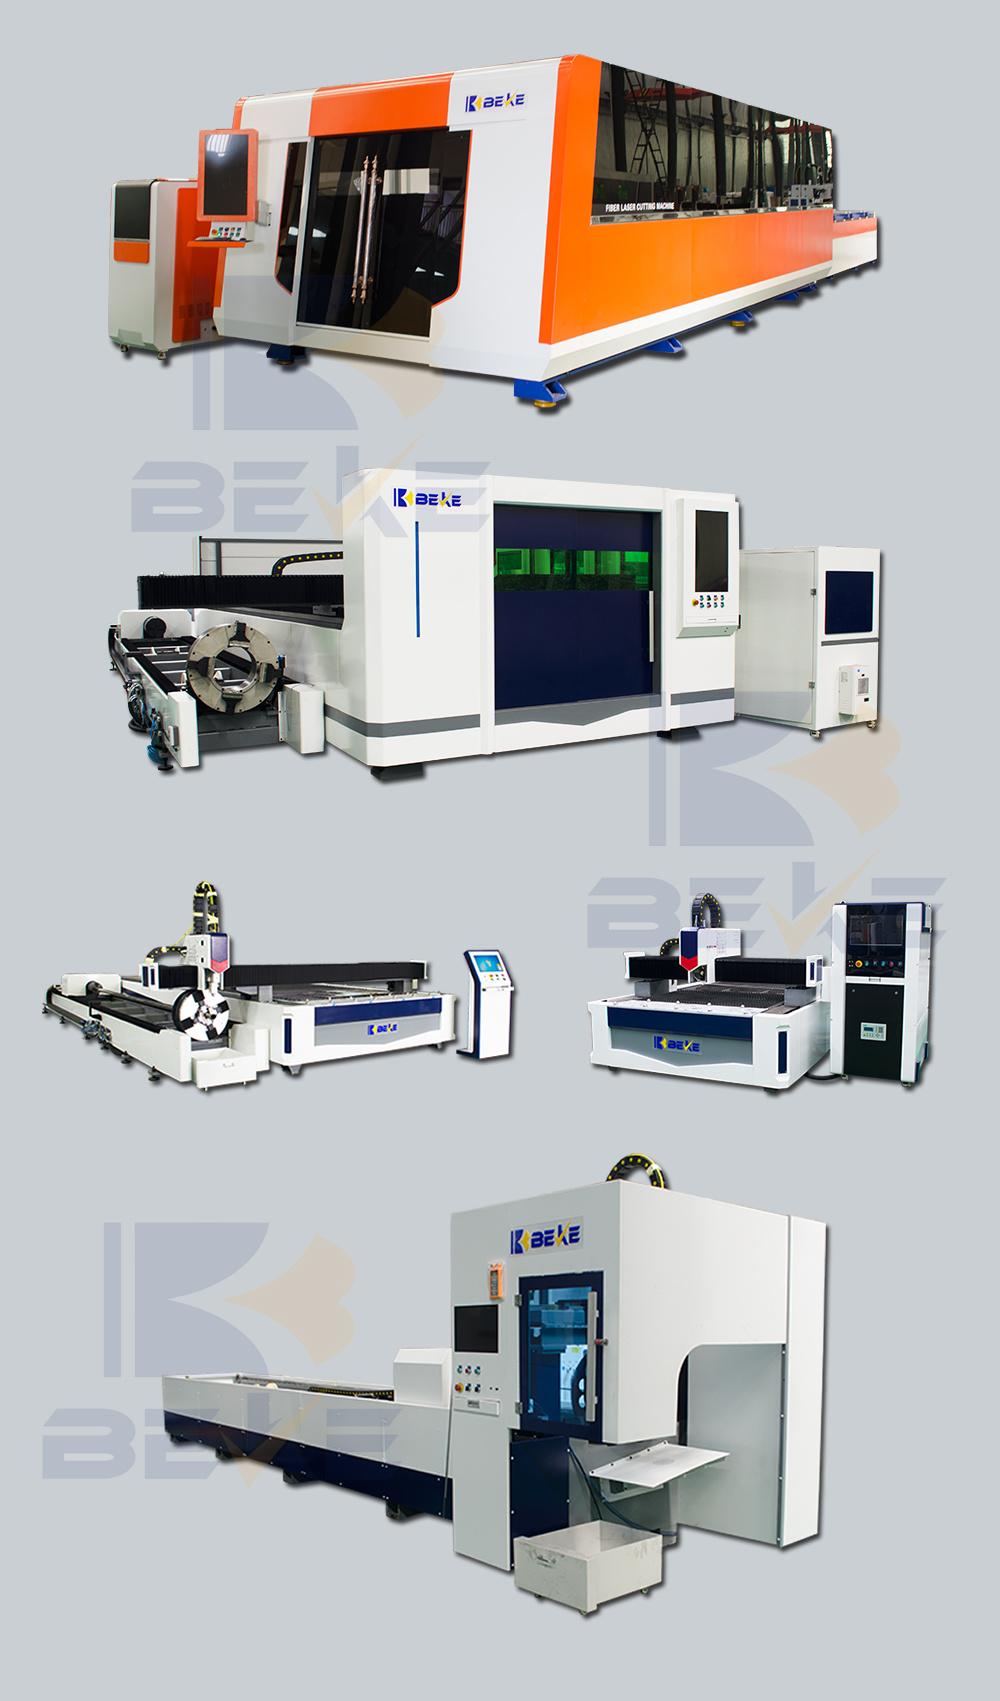 Nanjing Beke High Performance 12000W Round Closed Iron Sheet Laser Cutter